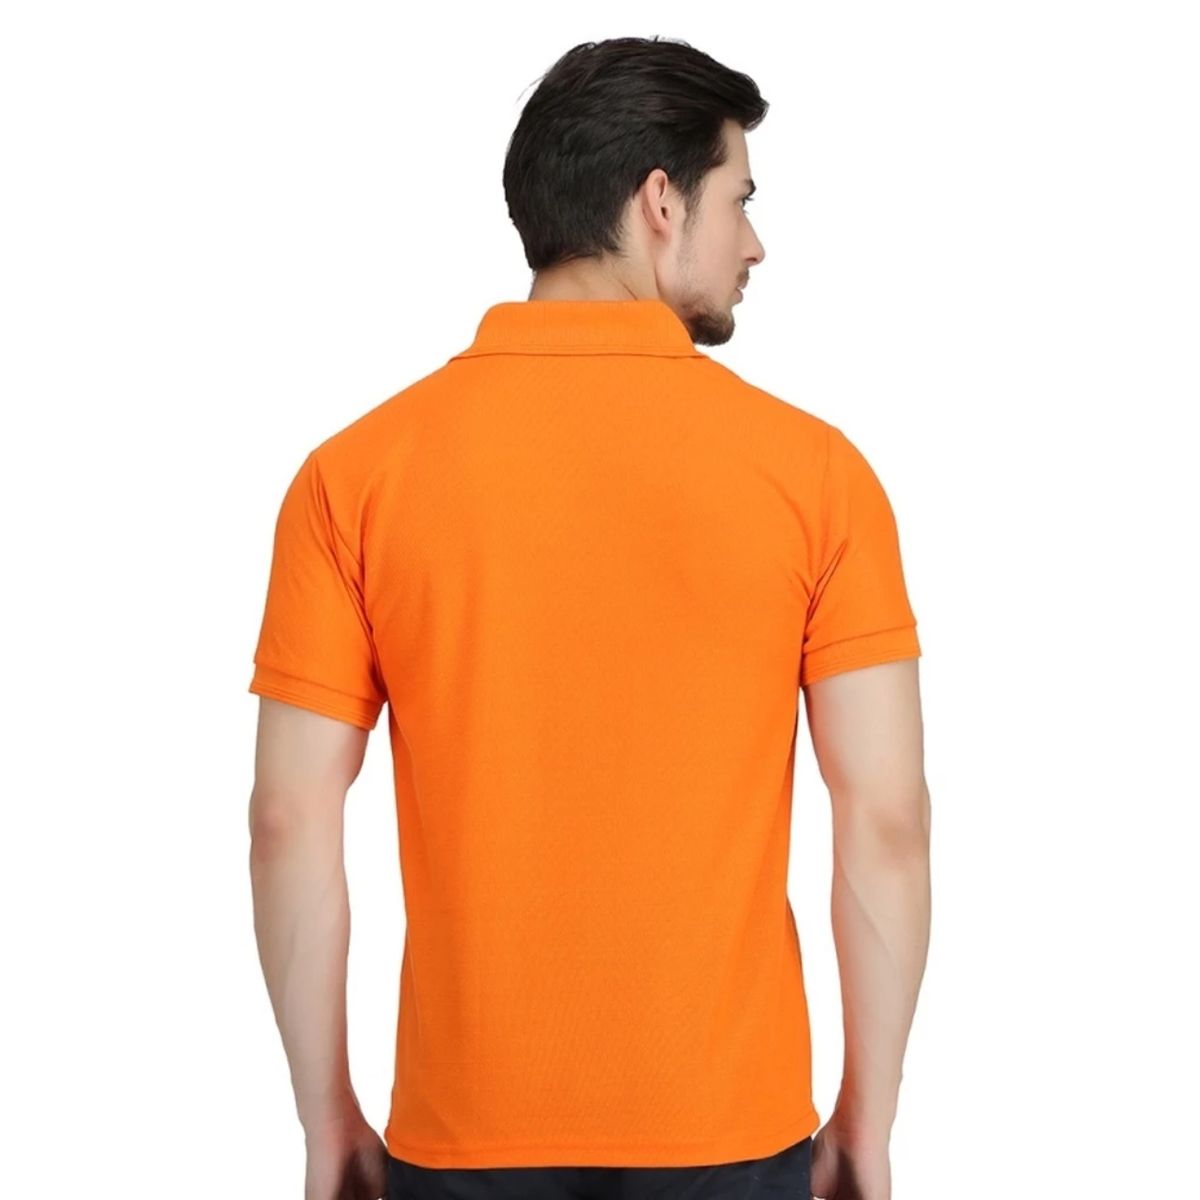 Buy POLO Orange T-Shirt at Lowest Price - POORT29298RJX29111 | Kraftly